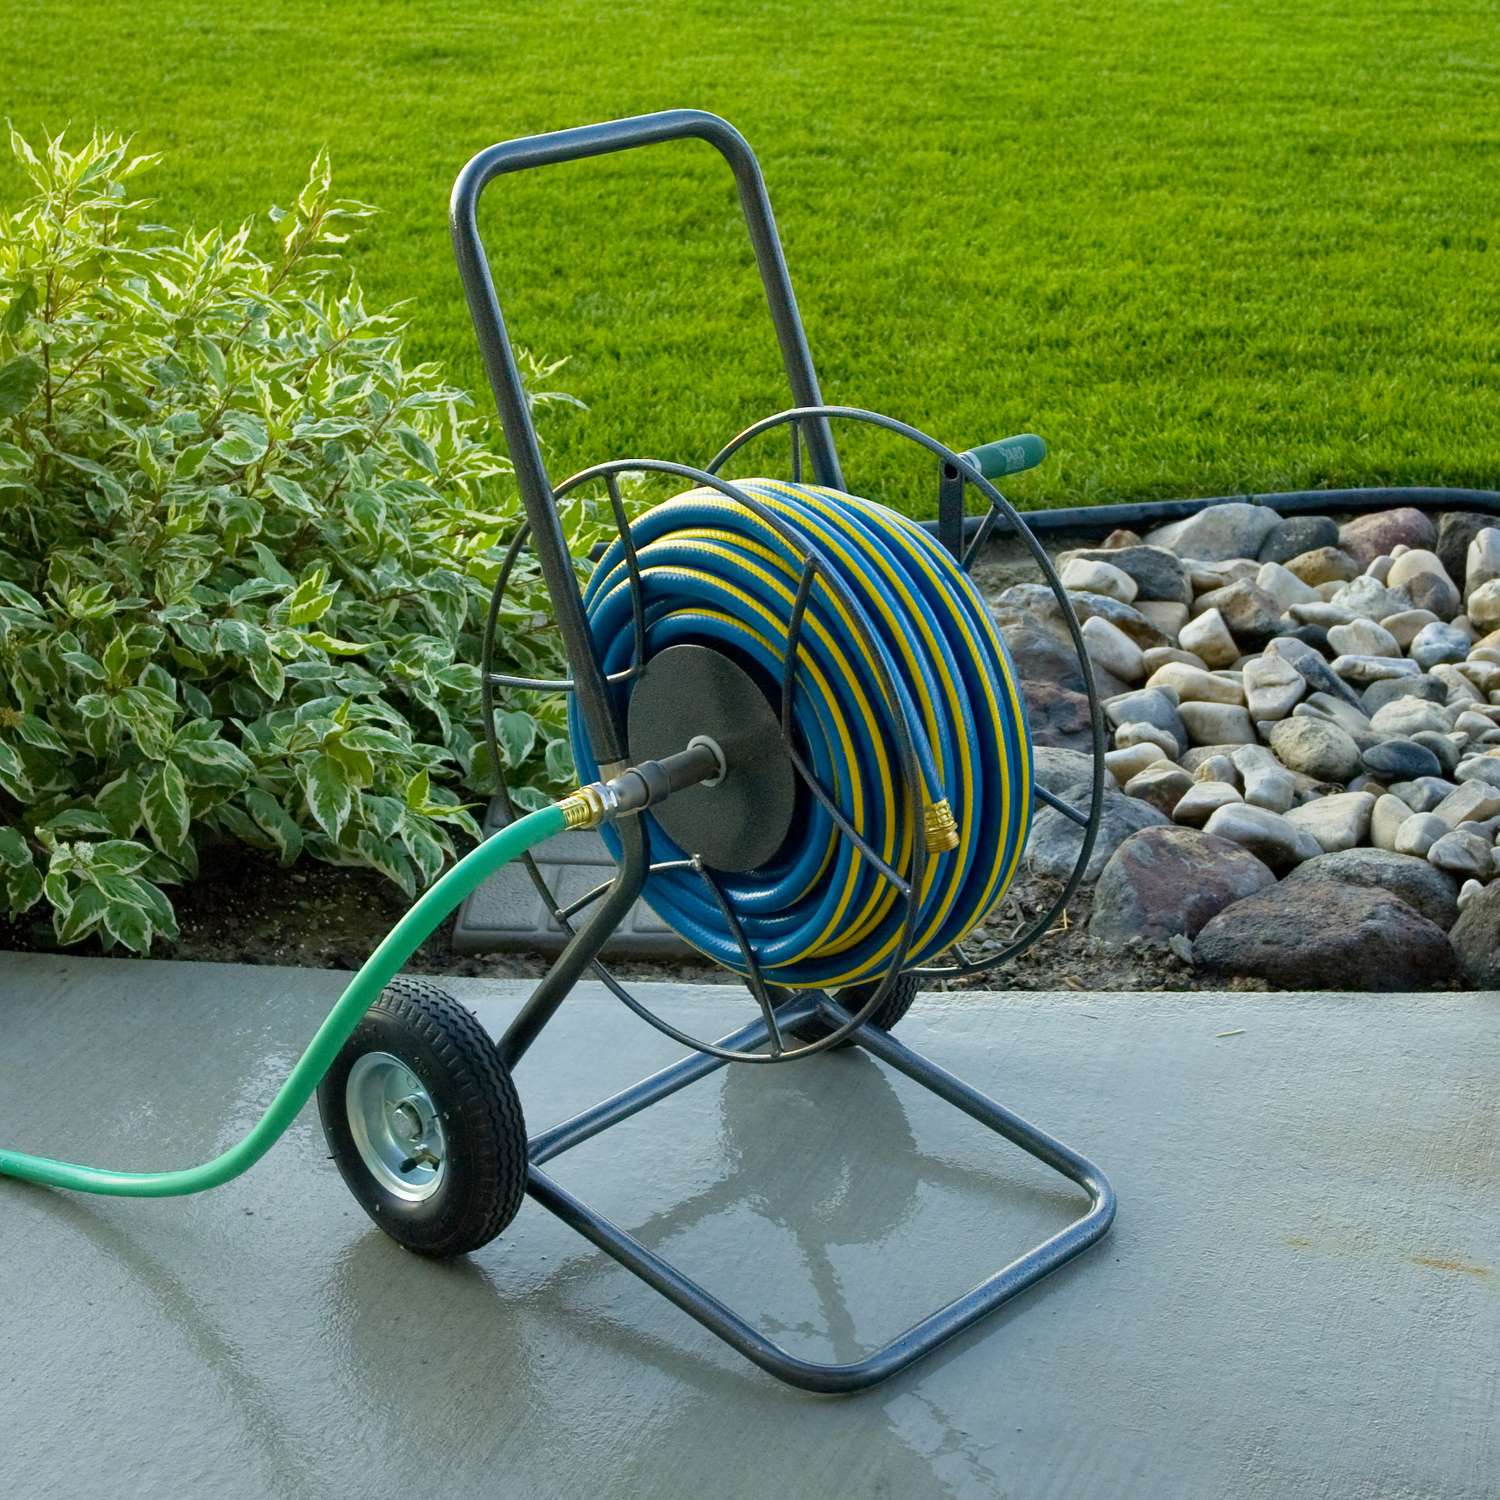 Utility air hose reel for Gardens & Irrigation 